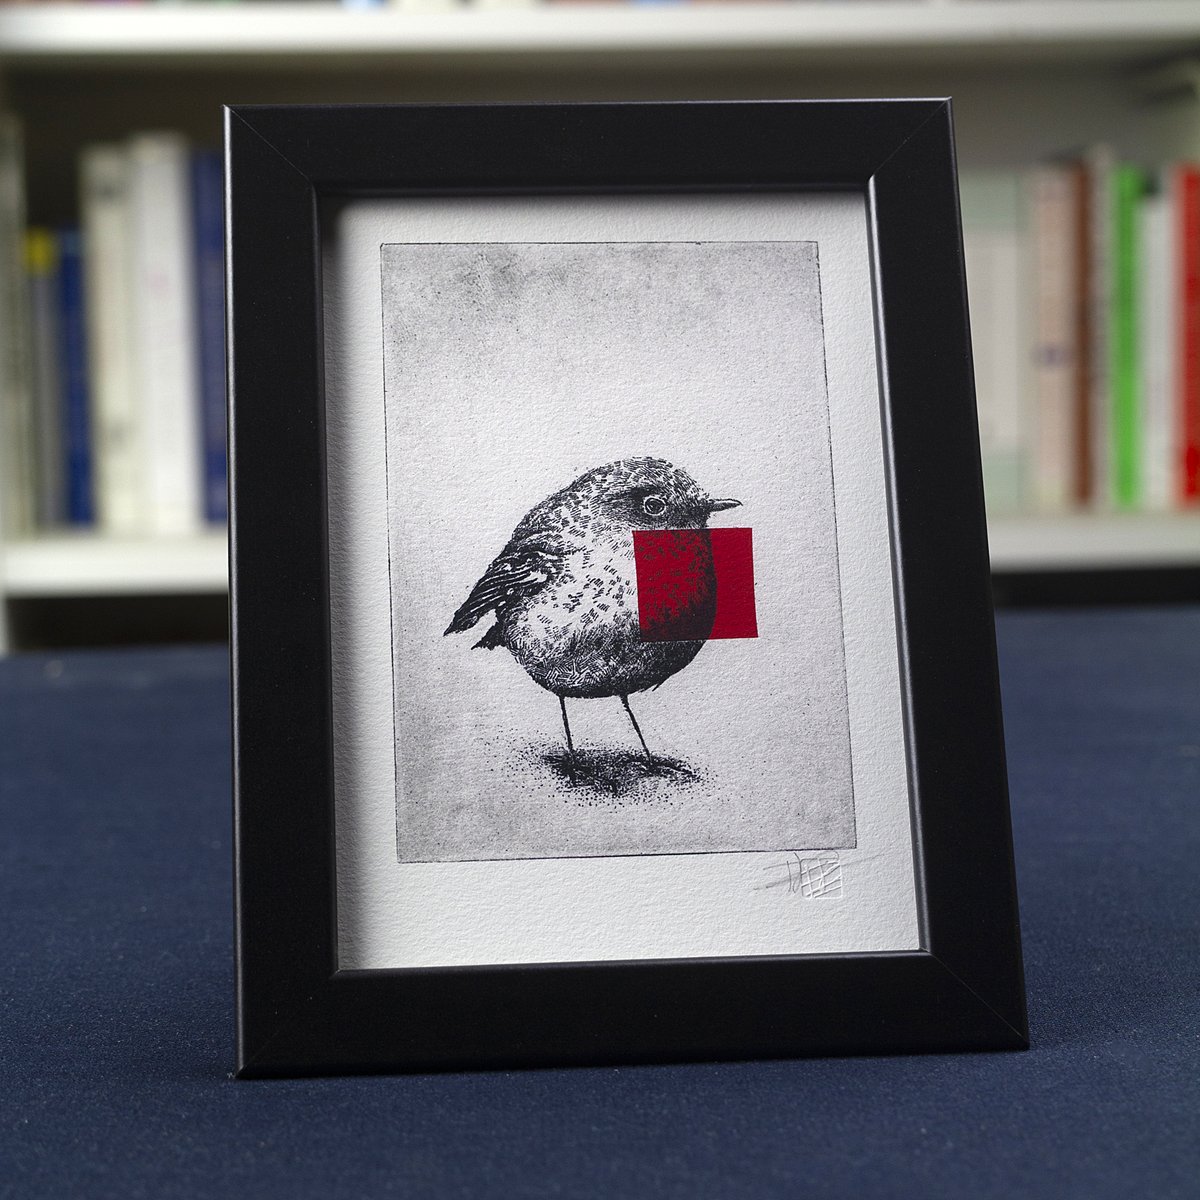 Original fine art etching, limited edition, intaglio 
clementscarpi.etsy.com/listing/148345… via @Etsy @EtsyFR
#BirdsOfTwitter #BirdTwitter #art #etching #printmaking #nature #prints #birds